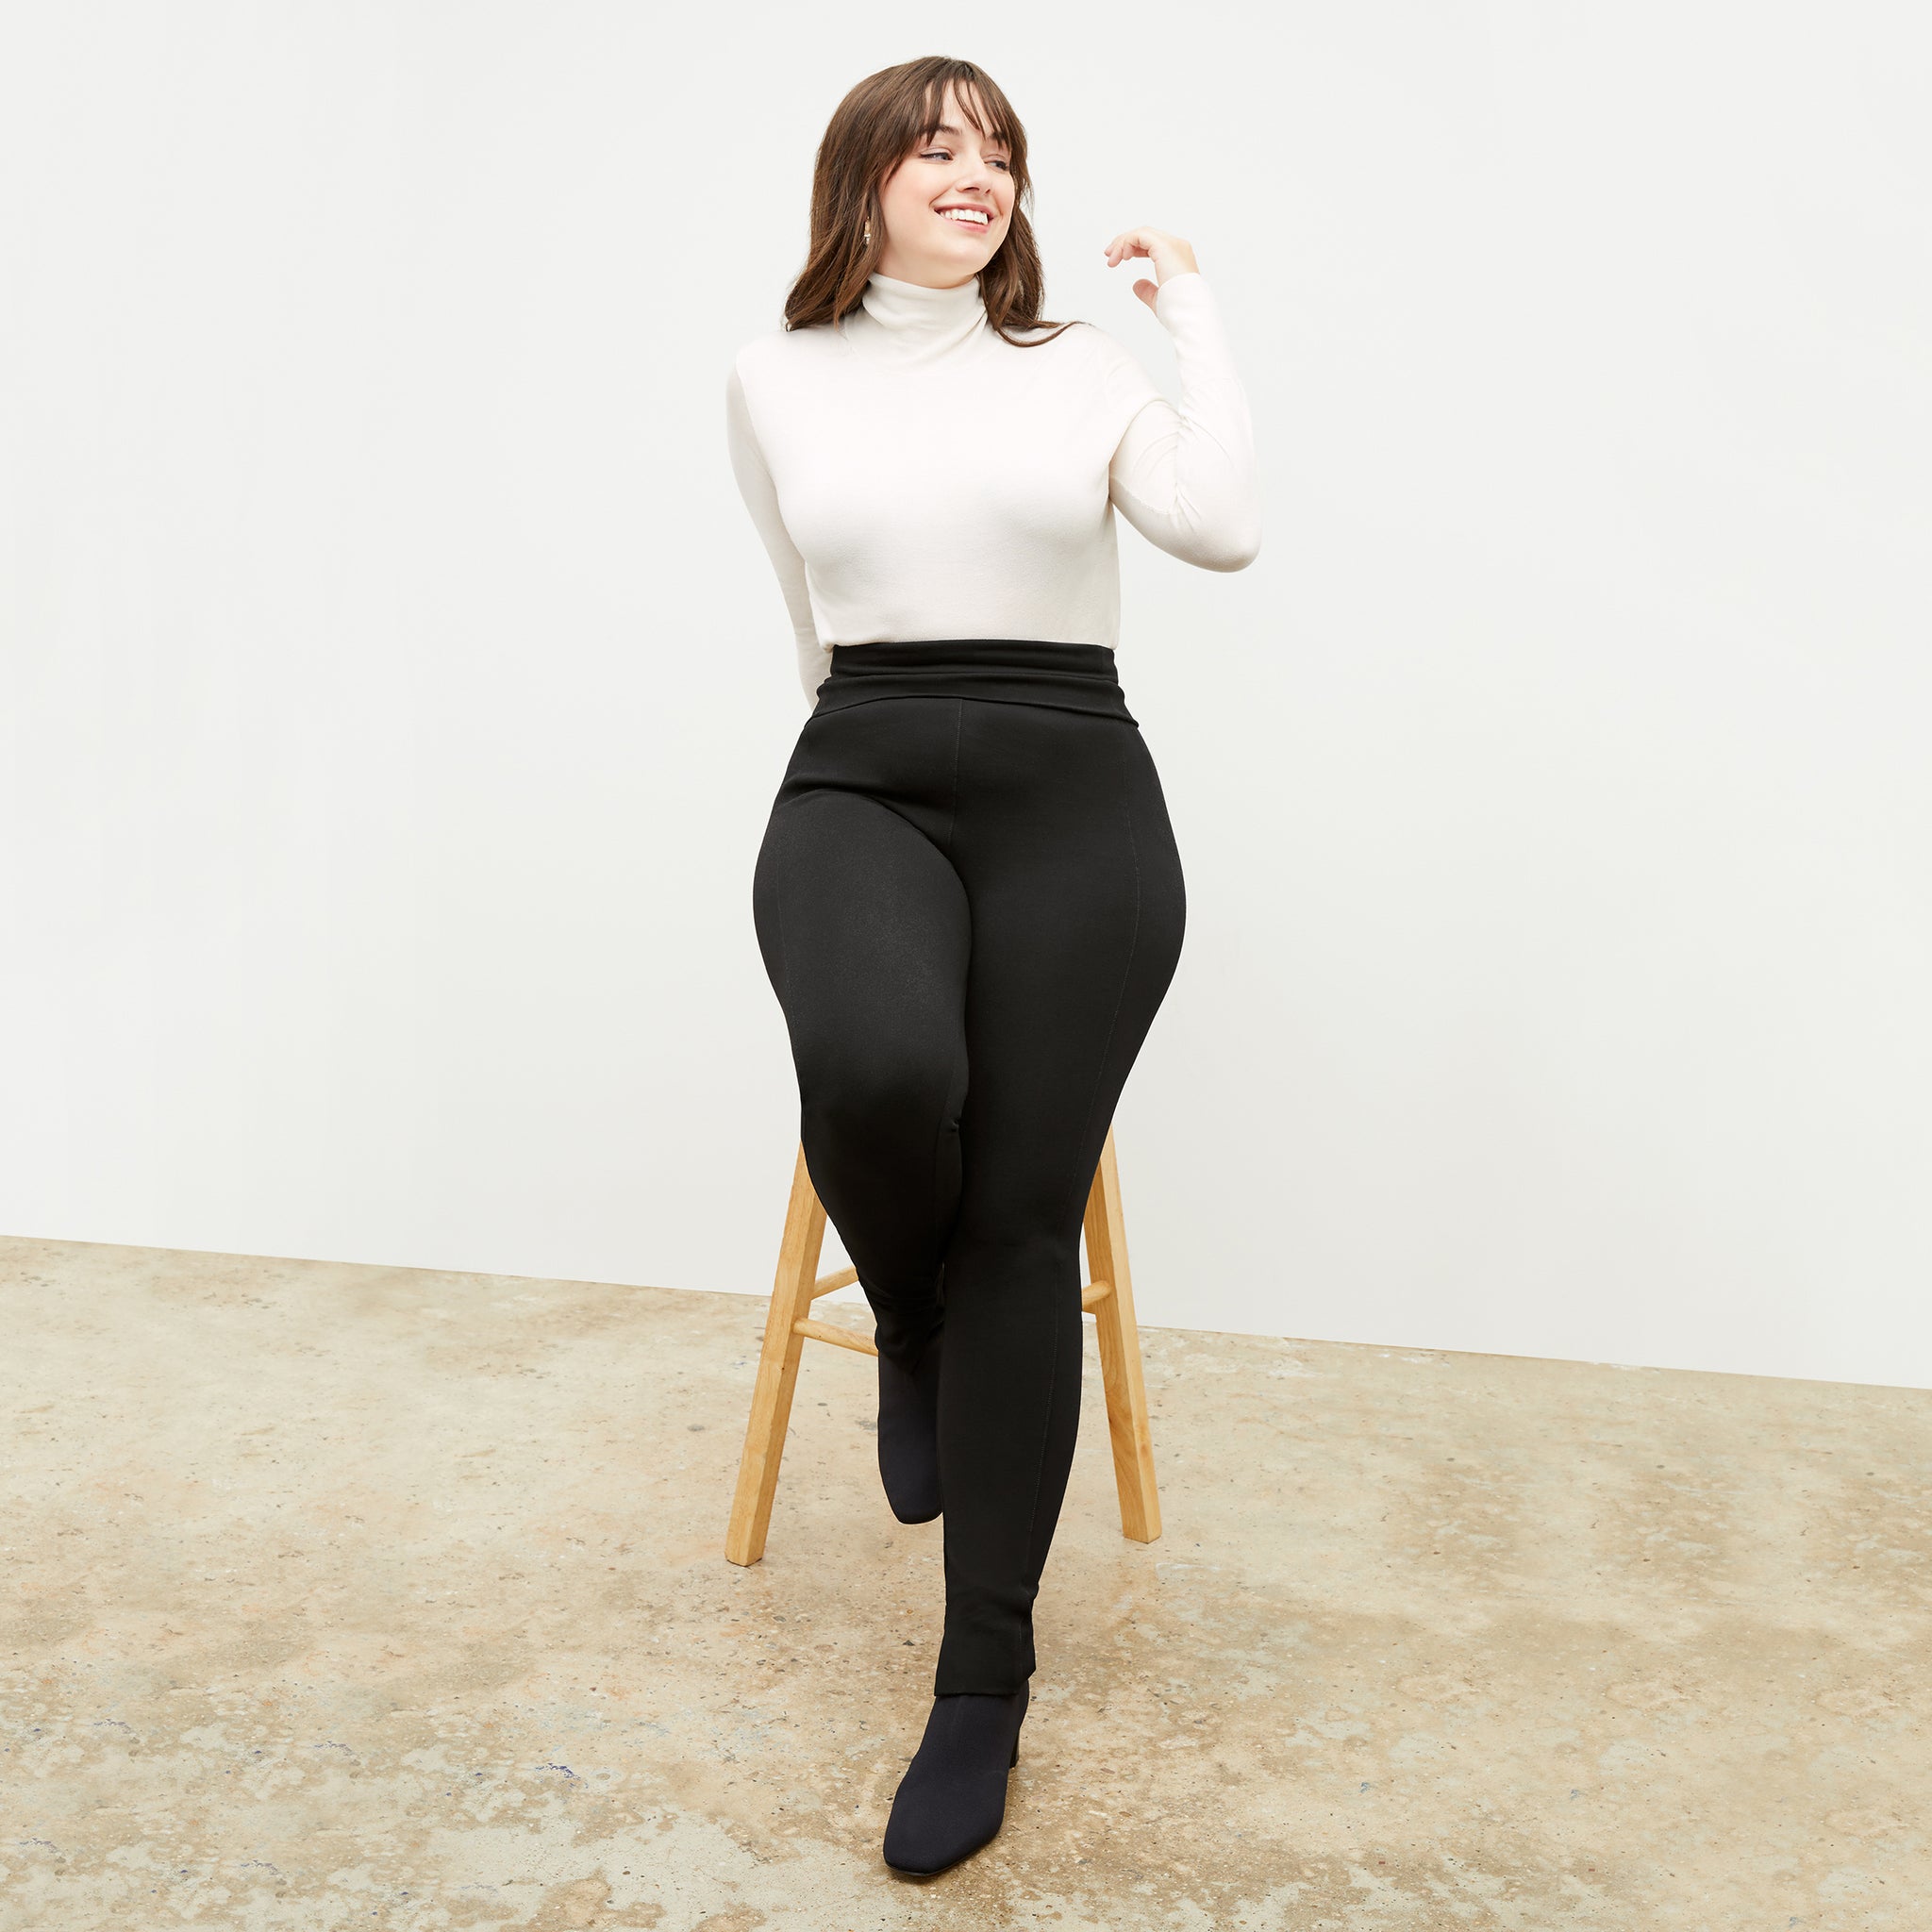 EMPETUA Women's High waisted Shaping black leggings Size M NWT